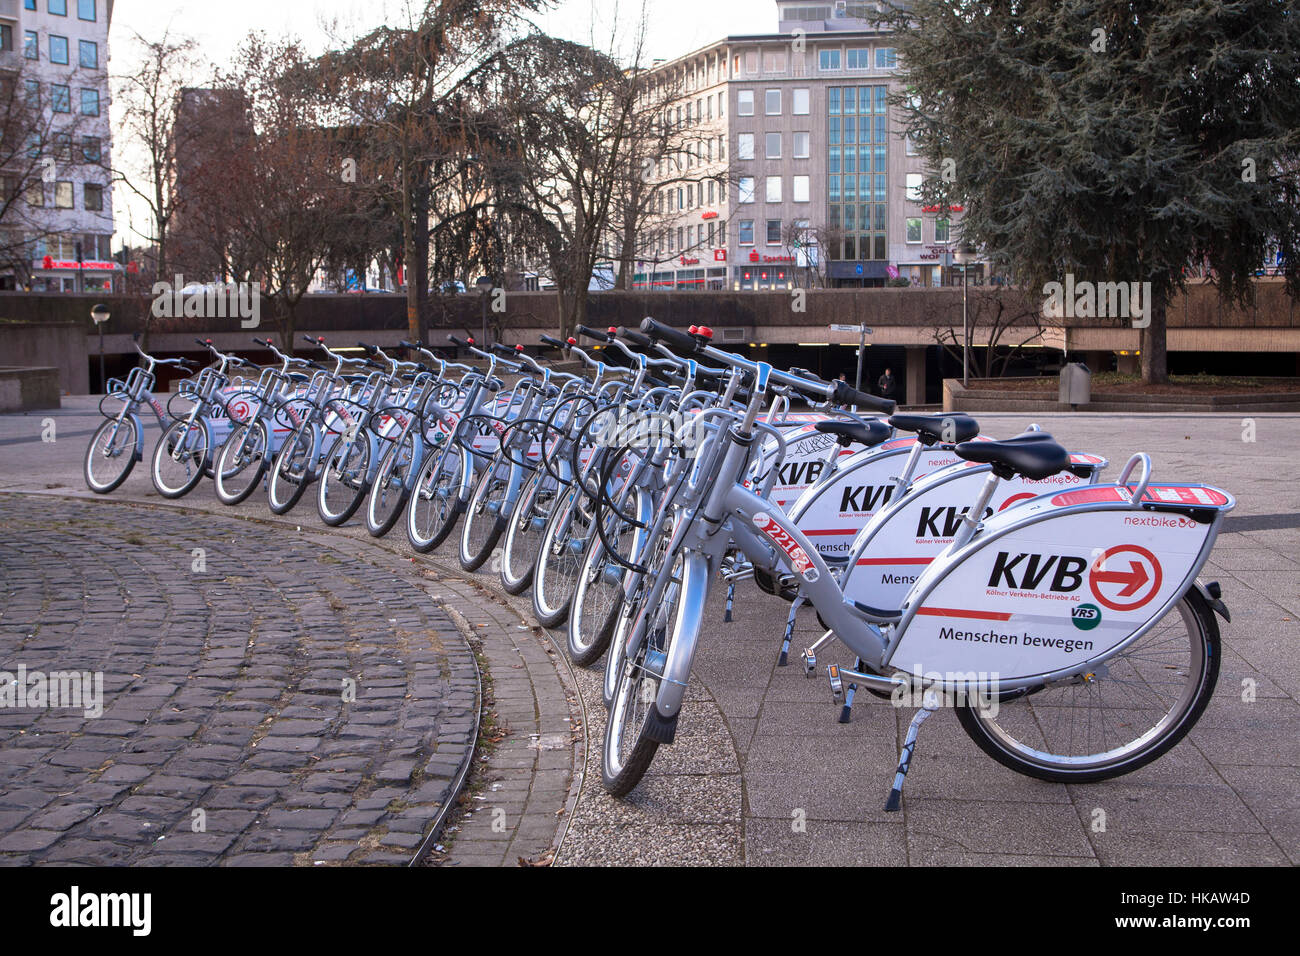 Germany, Cologne, rental bikes of the company Koelner Verkehrsbetriebe KVB (Cologne public transportation company) Stock Photo